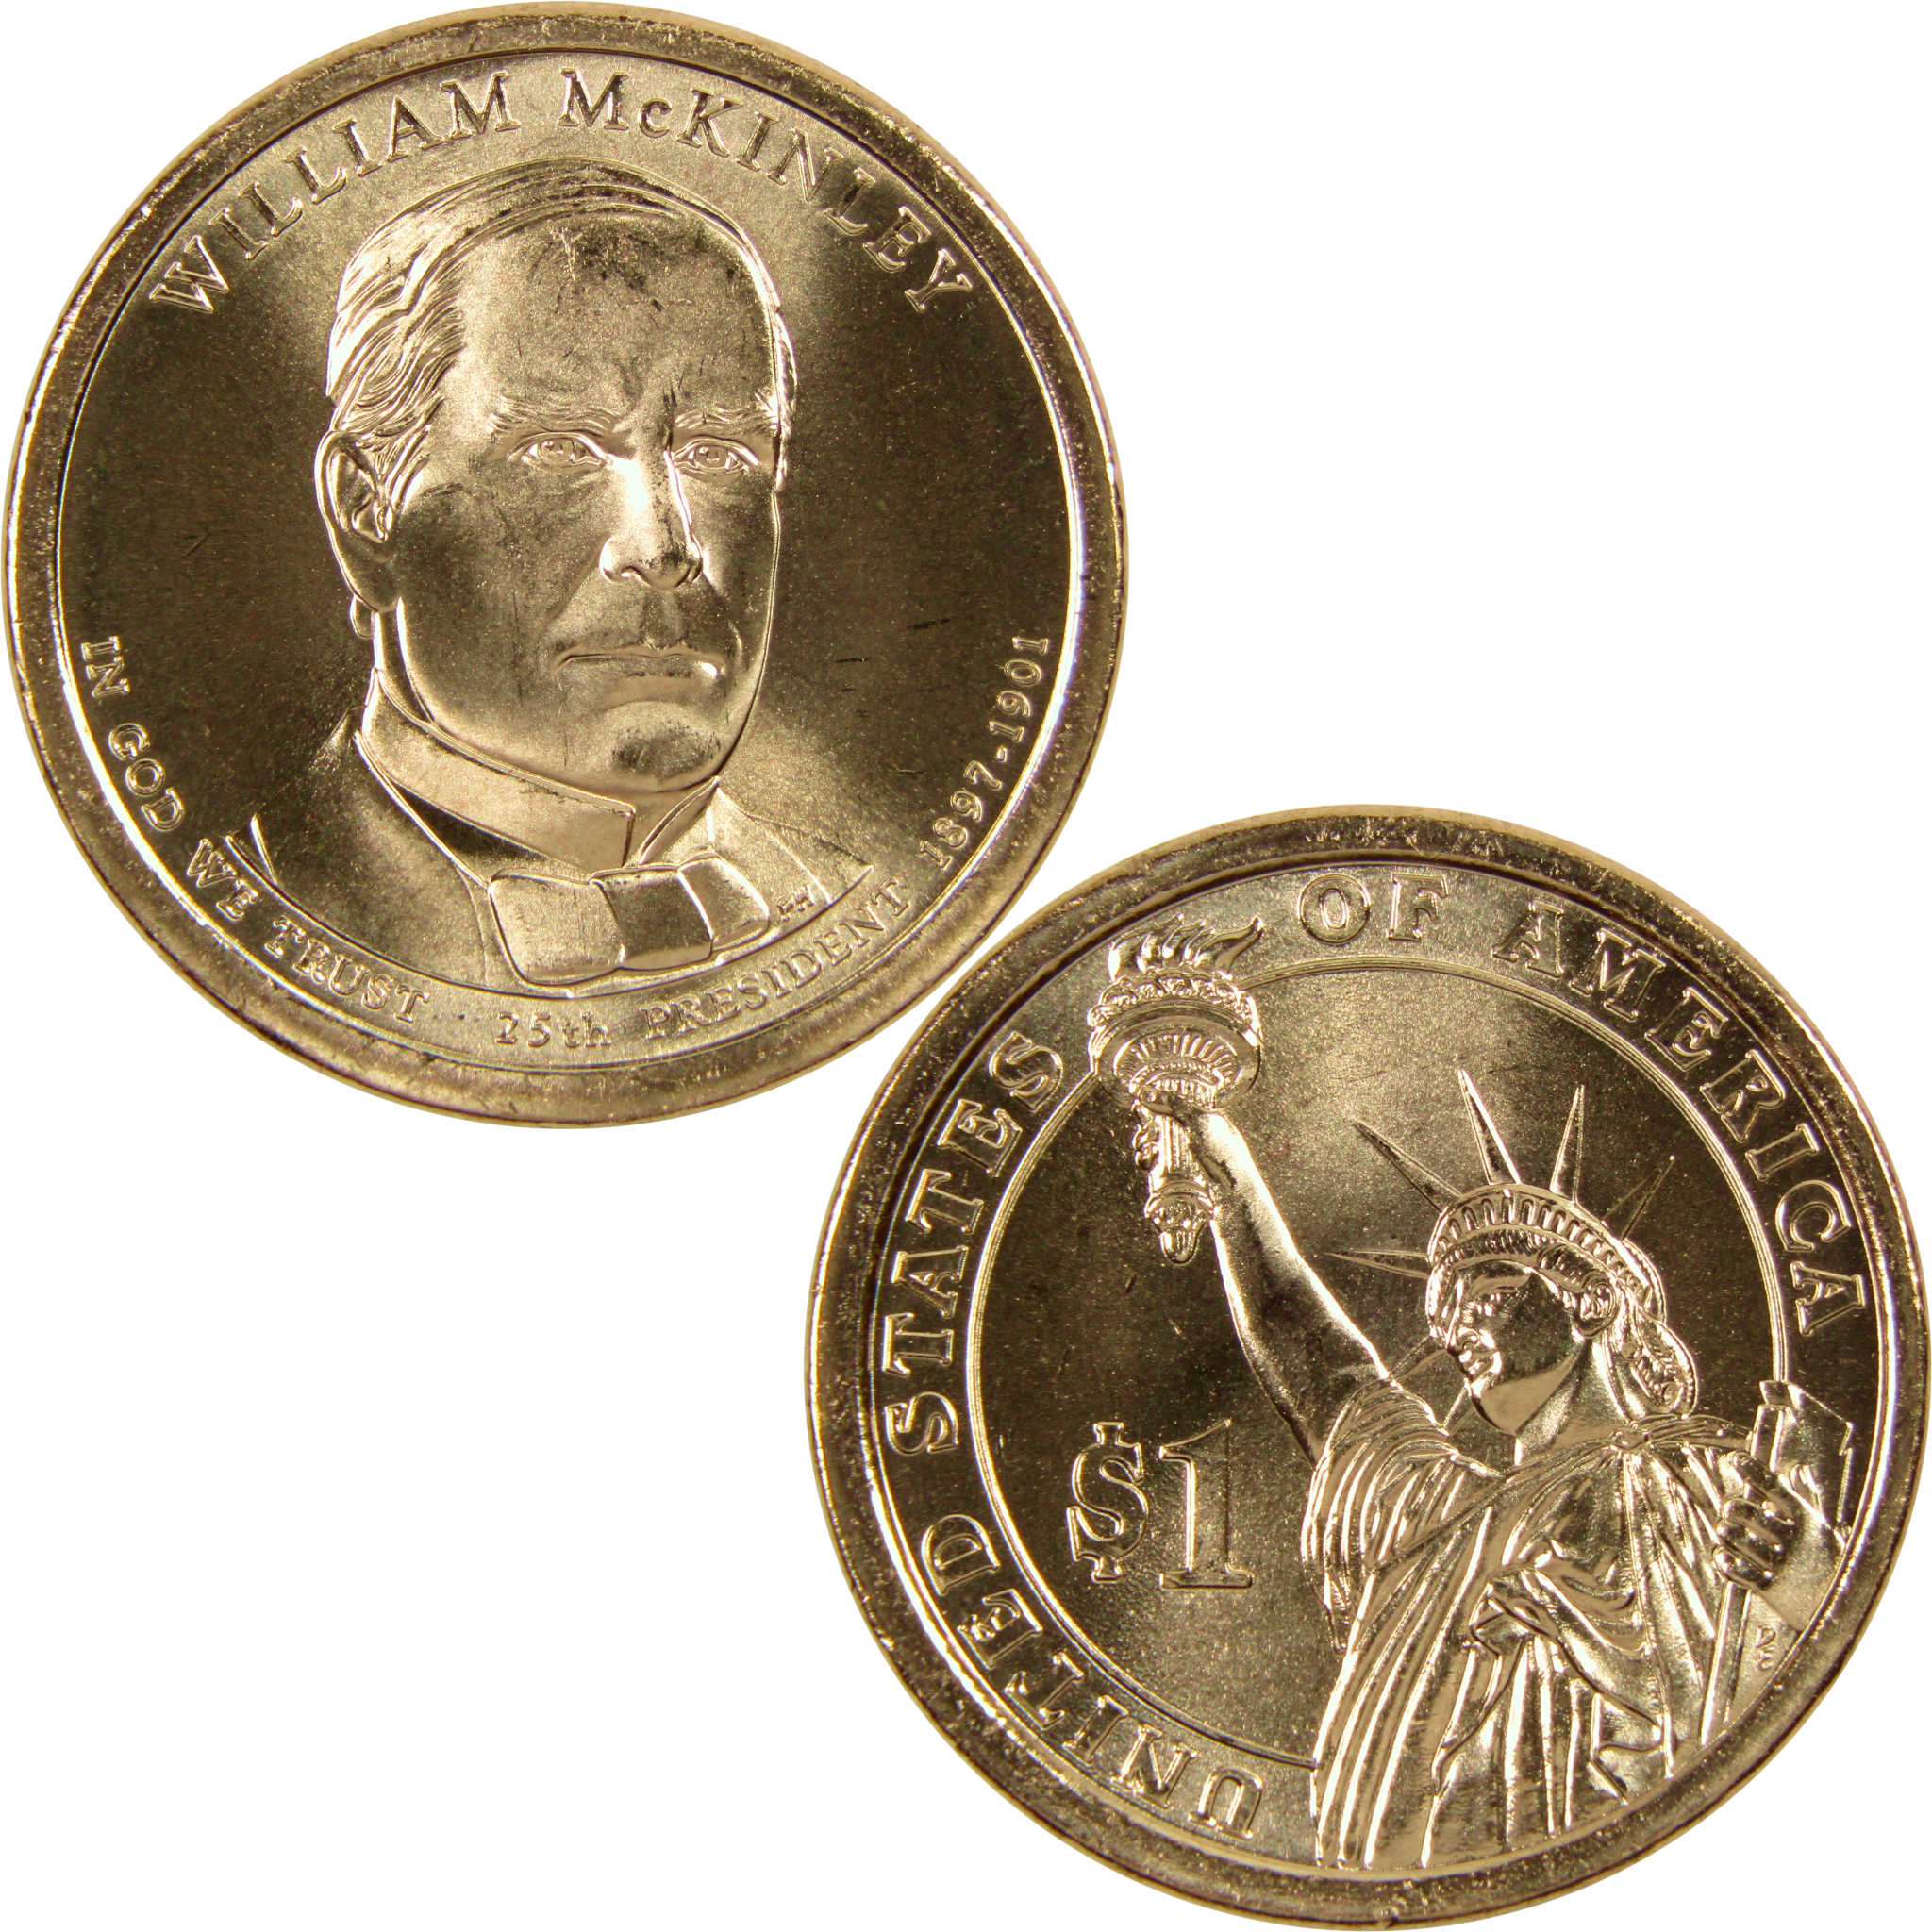 2013 P William McKinley Presidential Dollar BU Uncirculated $1 Coin